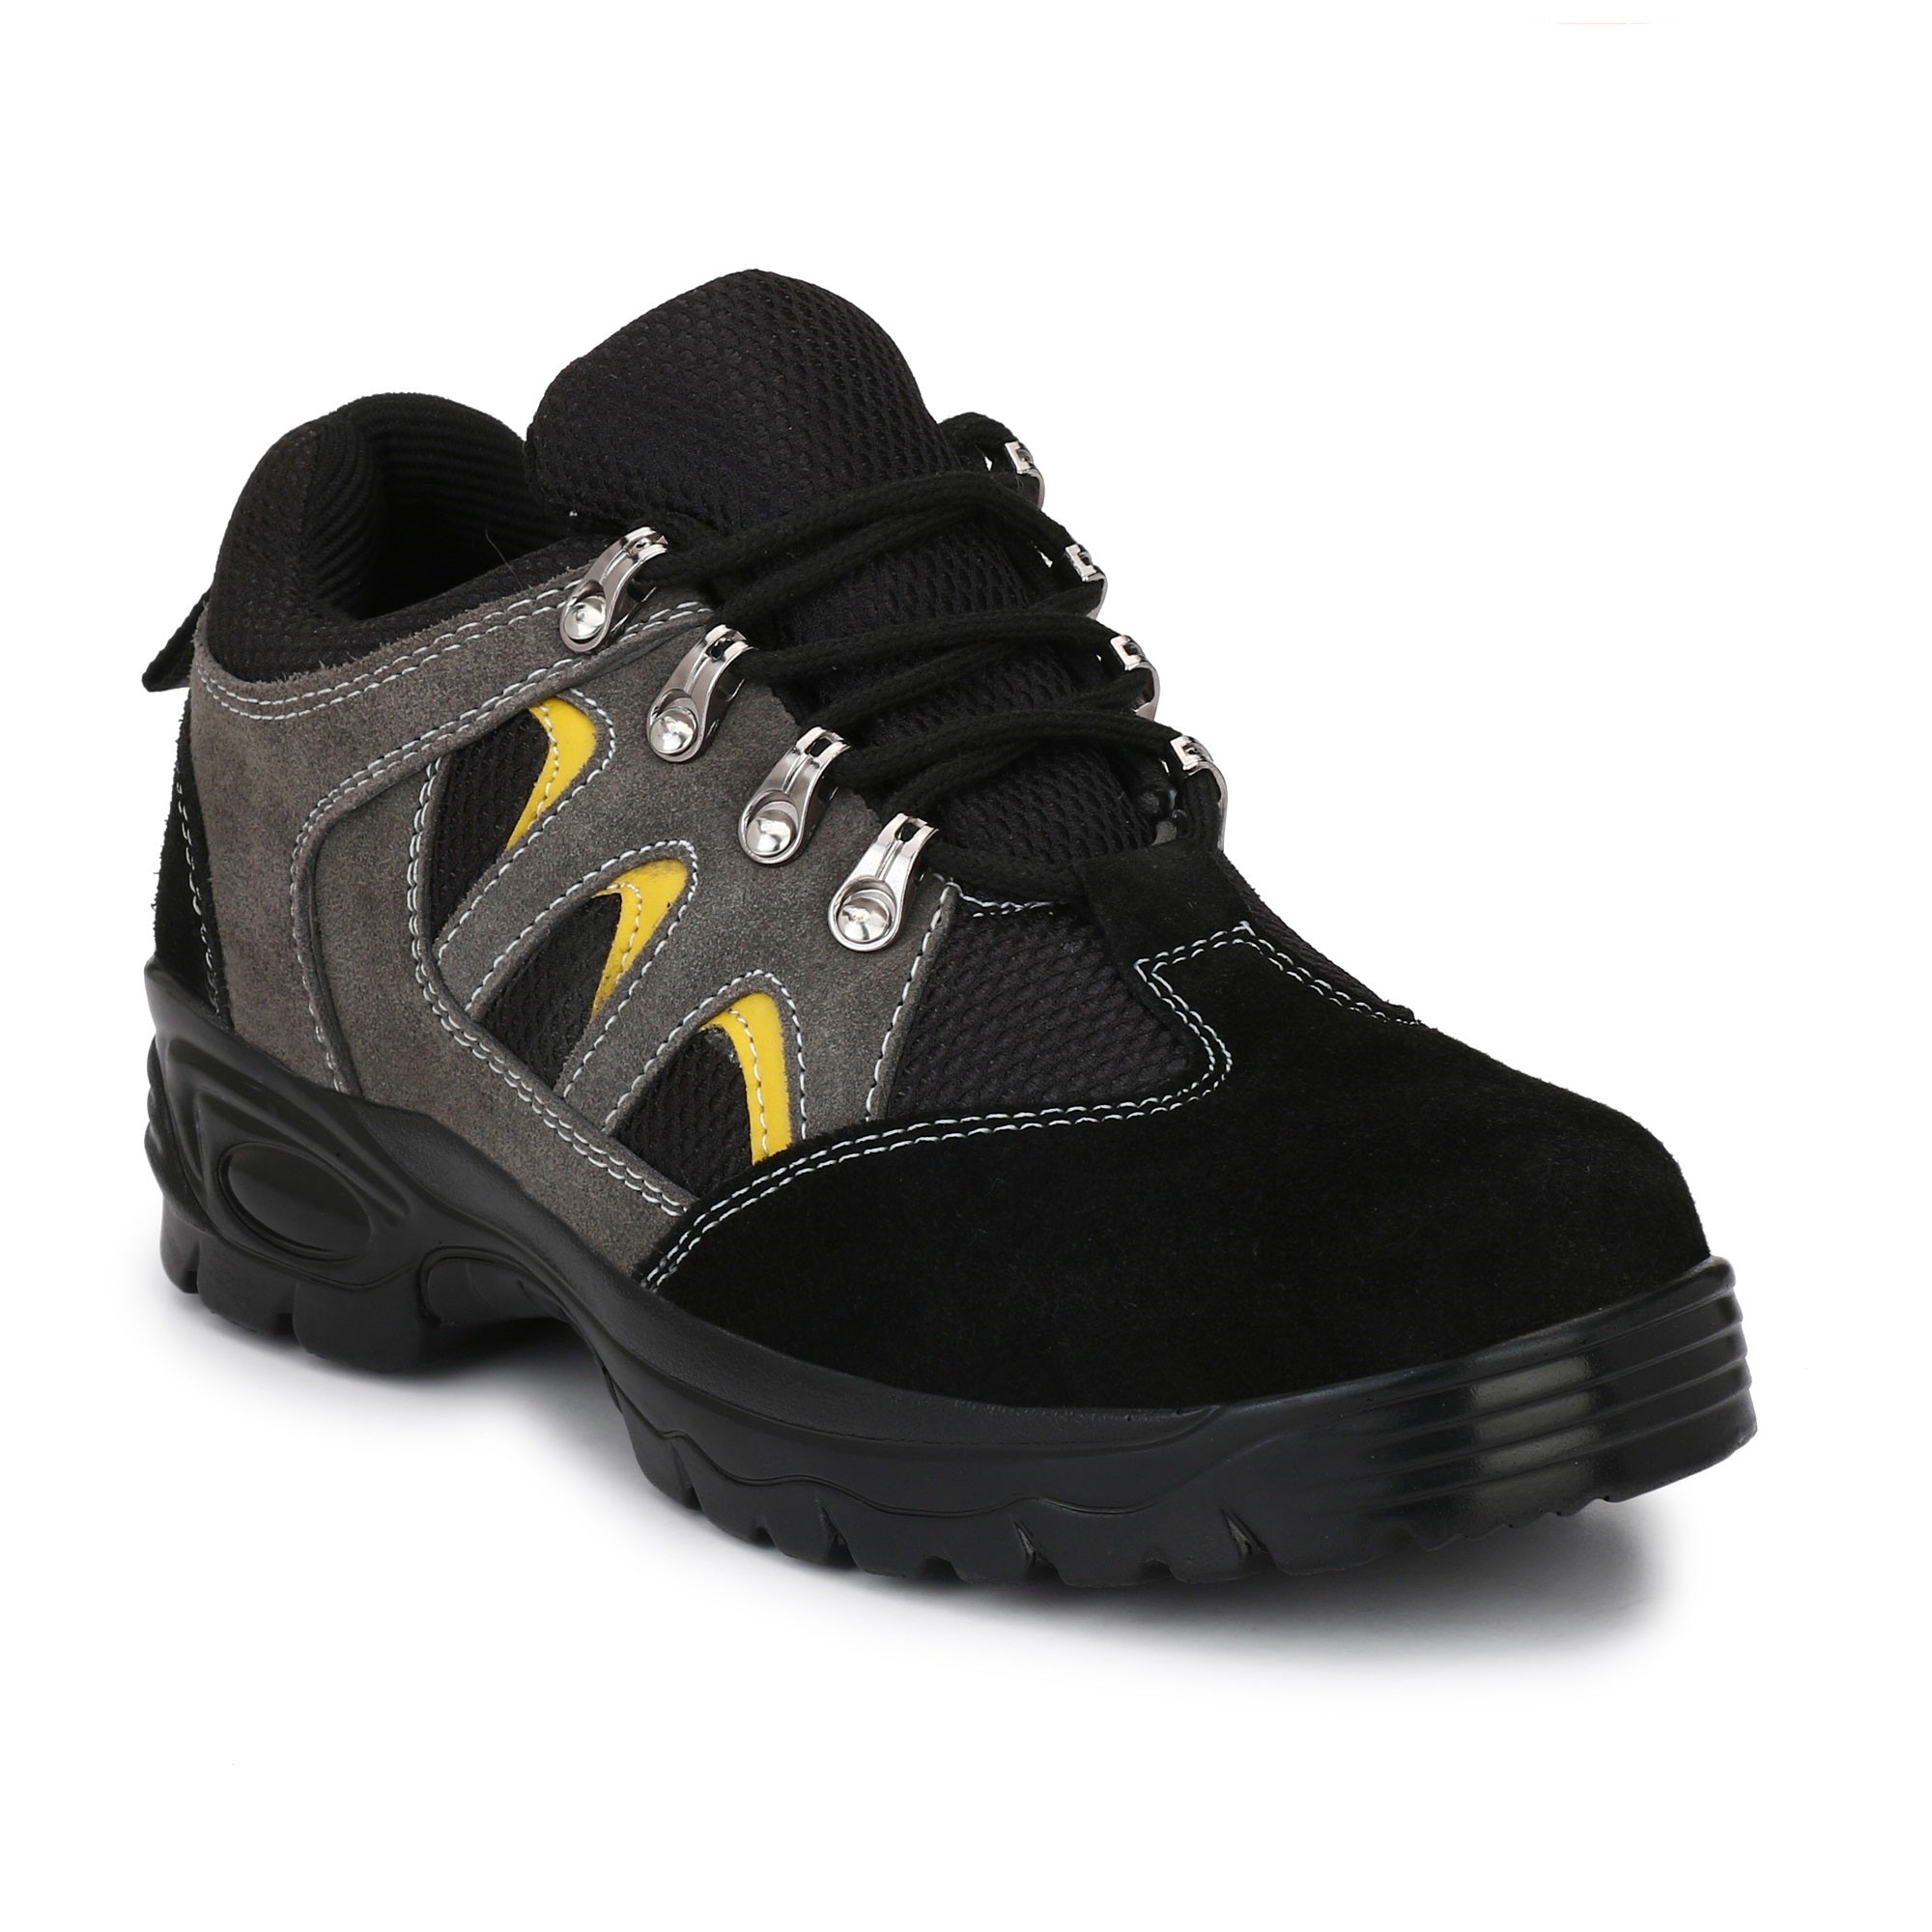 Kavacha Leather Steel Toe Safety Shoe 503 PU sole